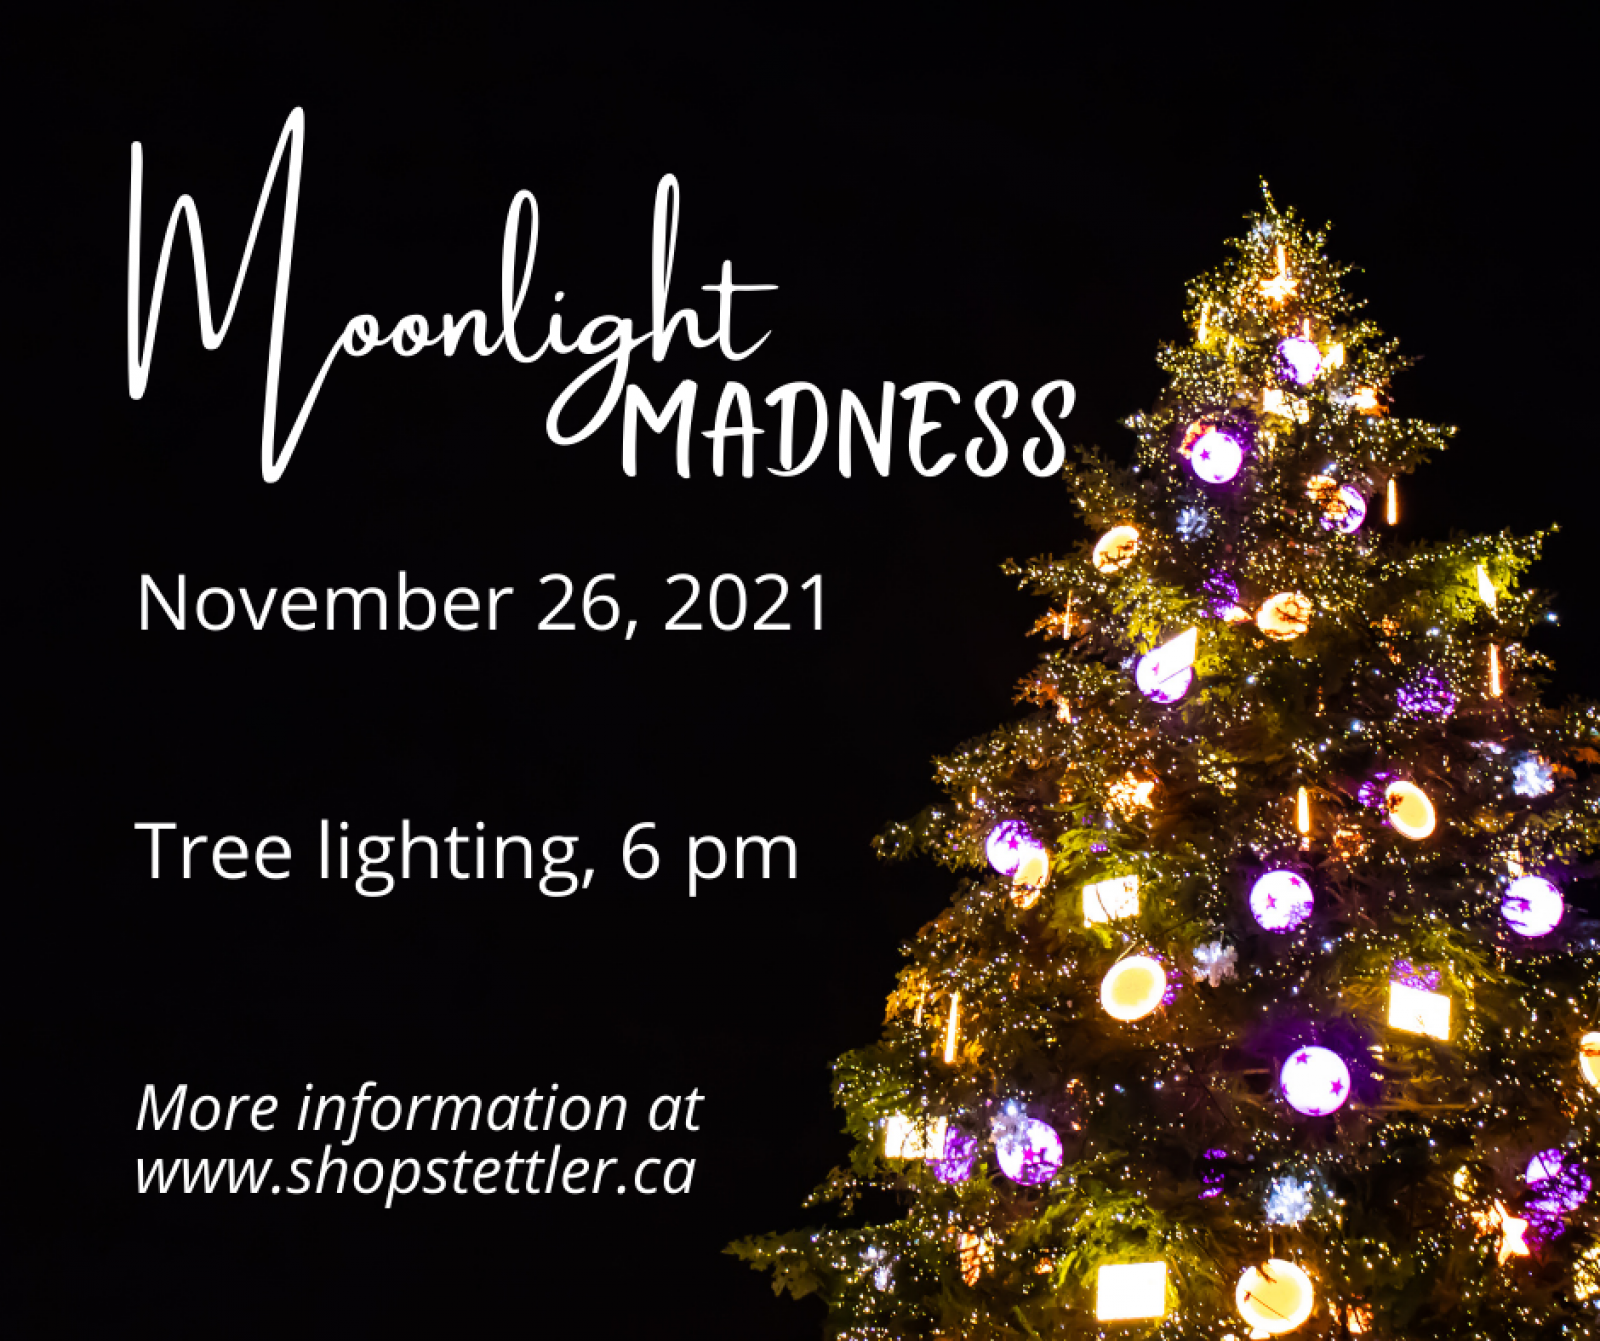 Moonlight madness tree lighting